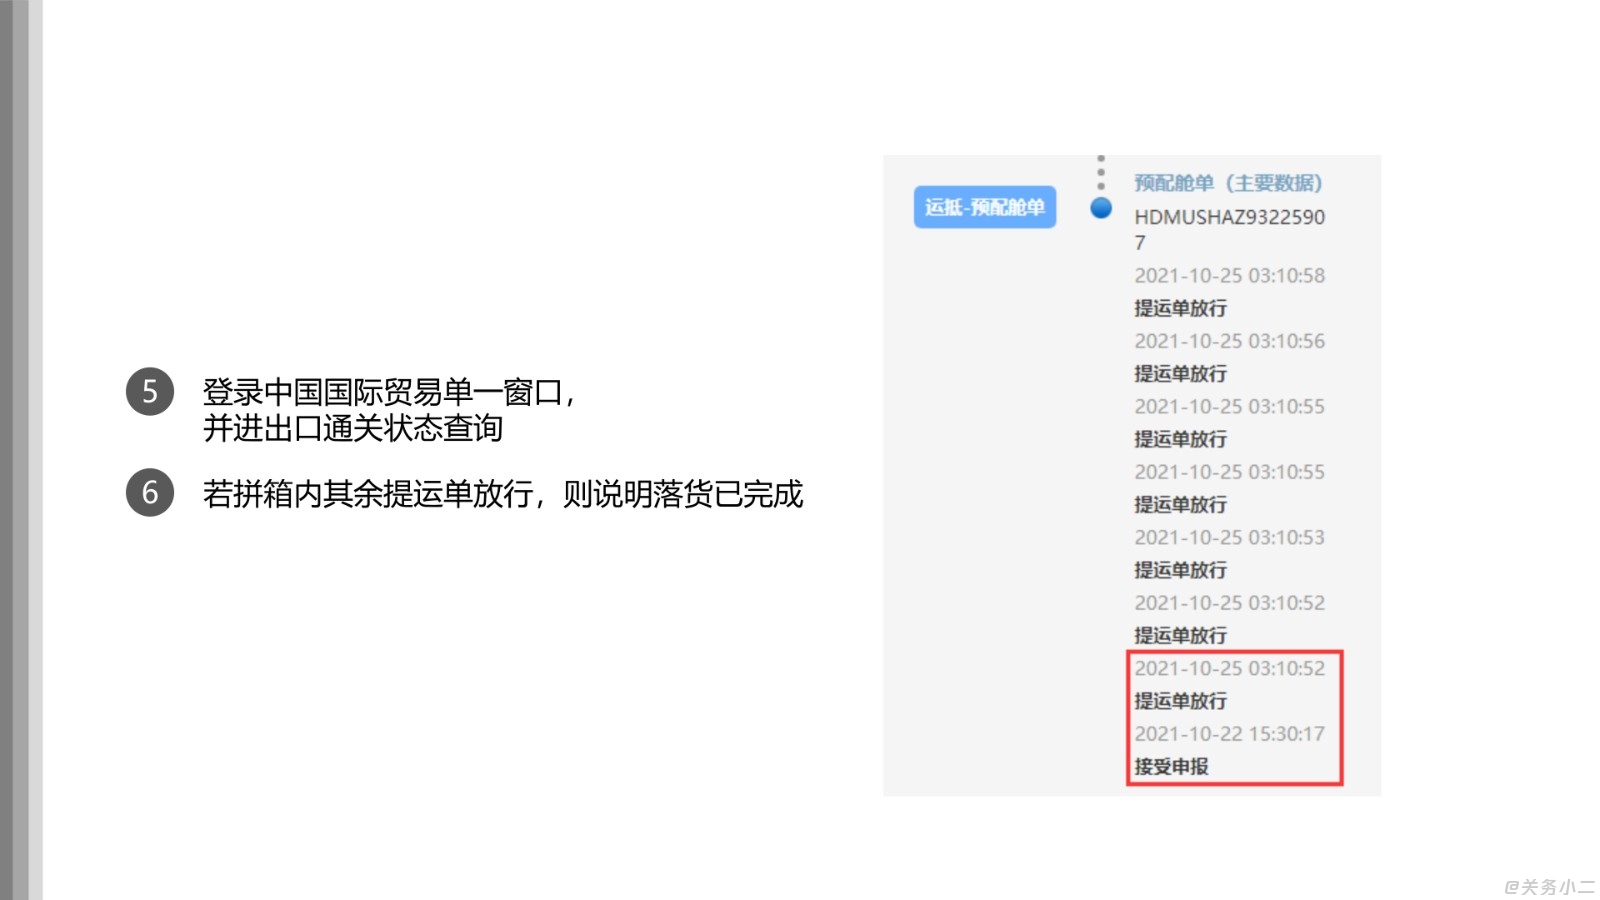 PPT-上海海关海运出口放行信息切换安排宣贯会_7.jpg